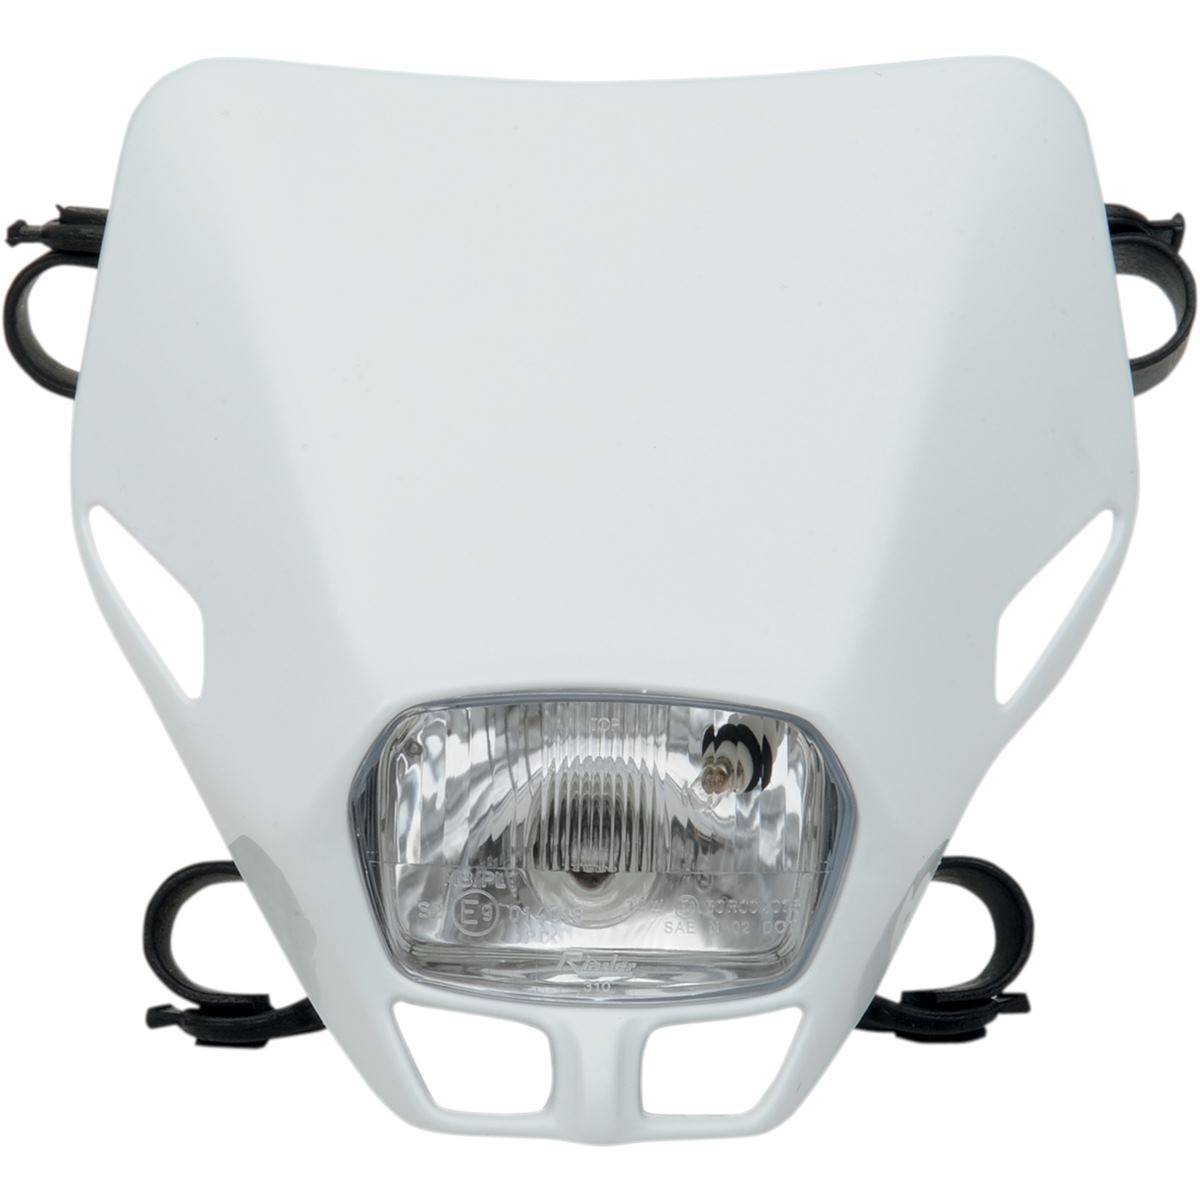 Ufo Plast Headlight Mask Fire Fly White